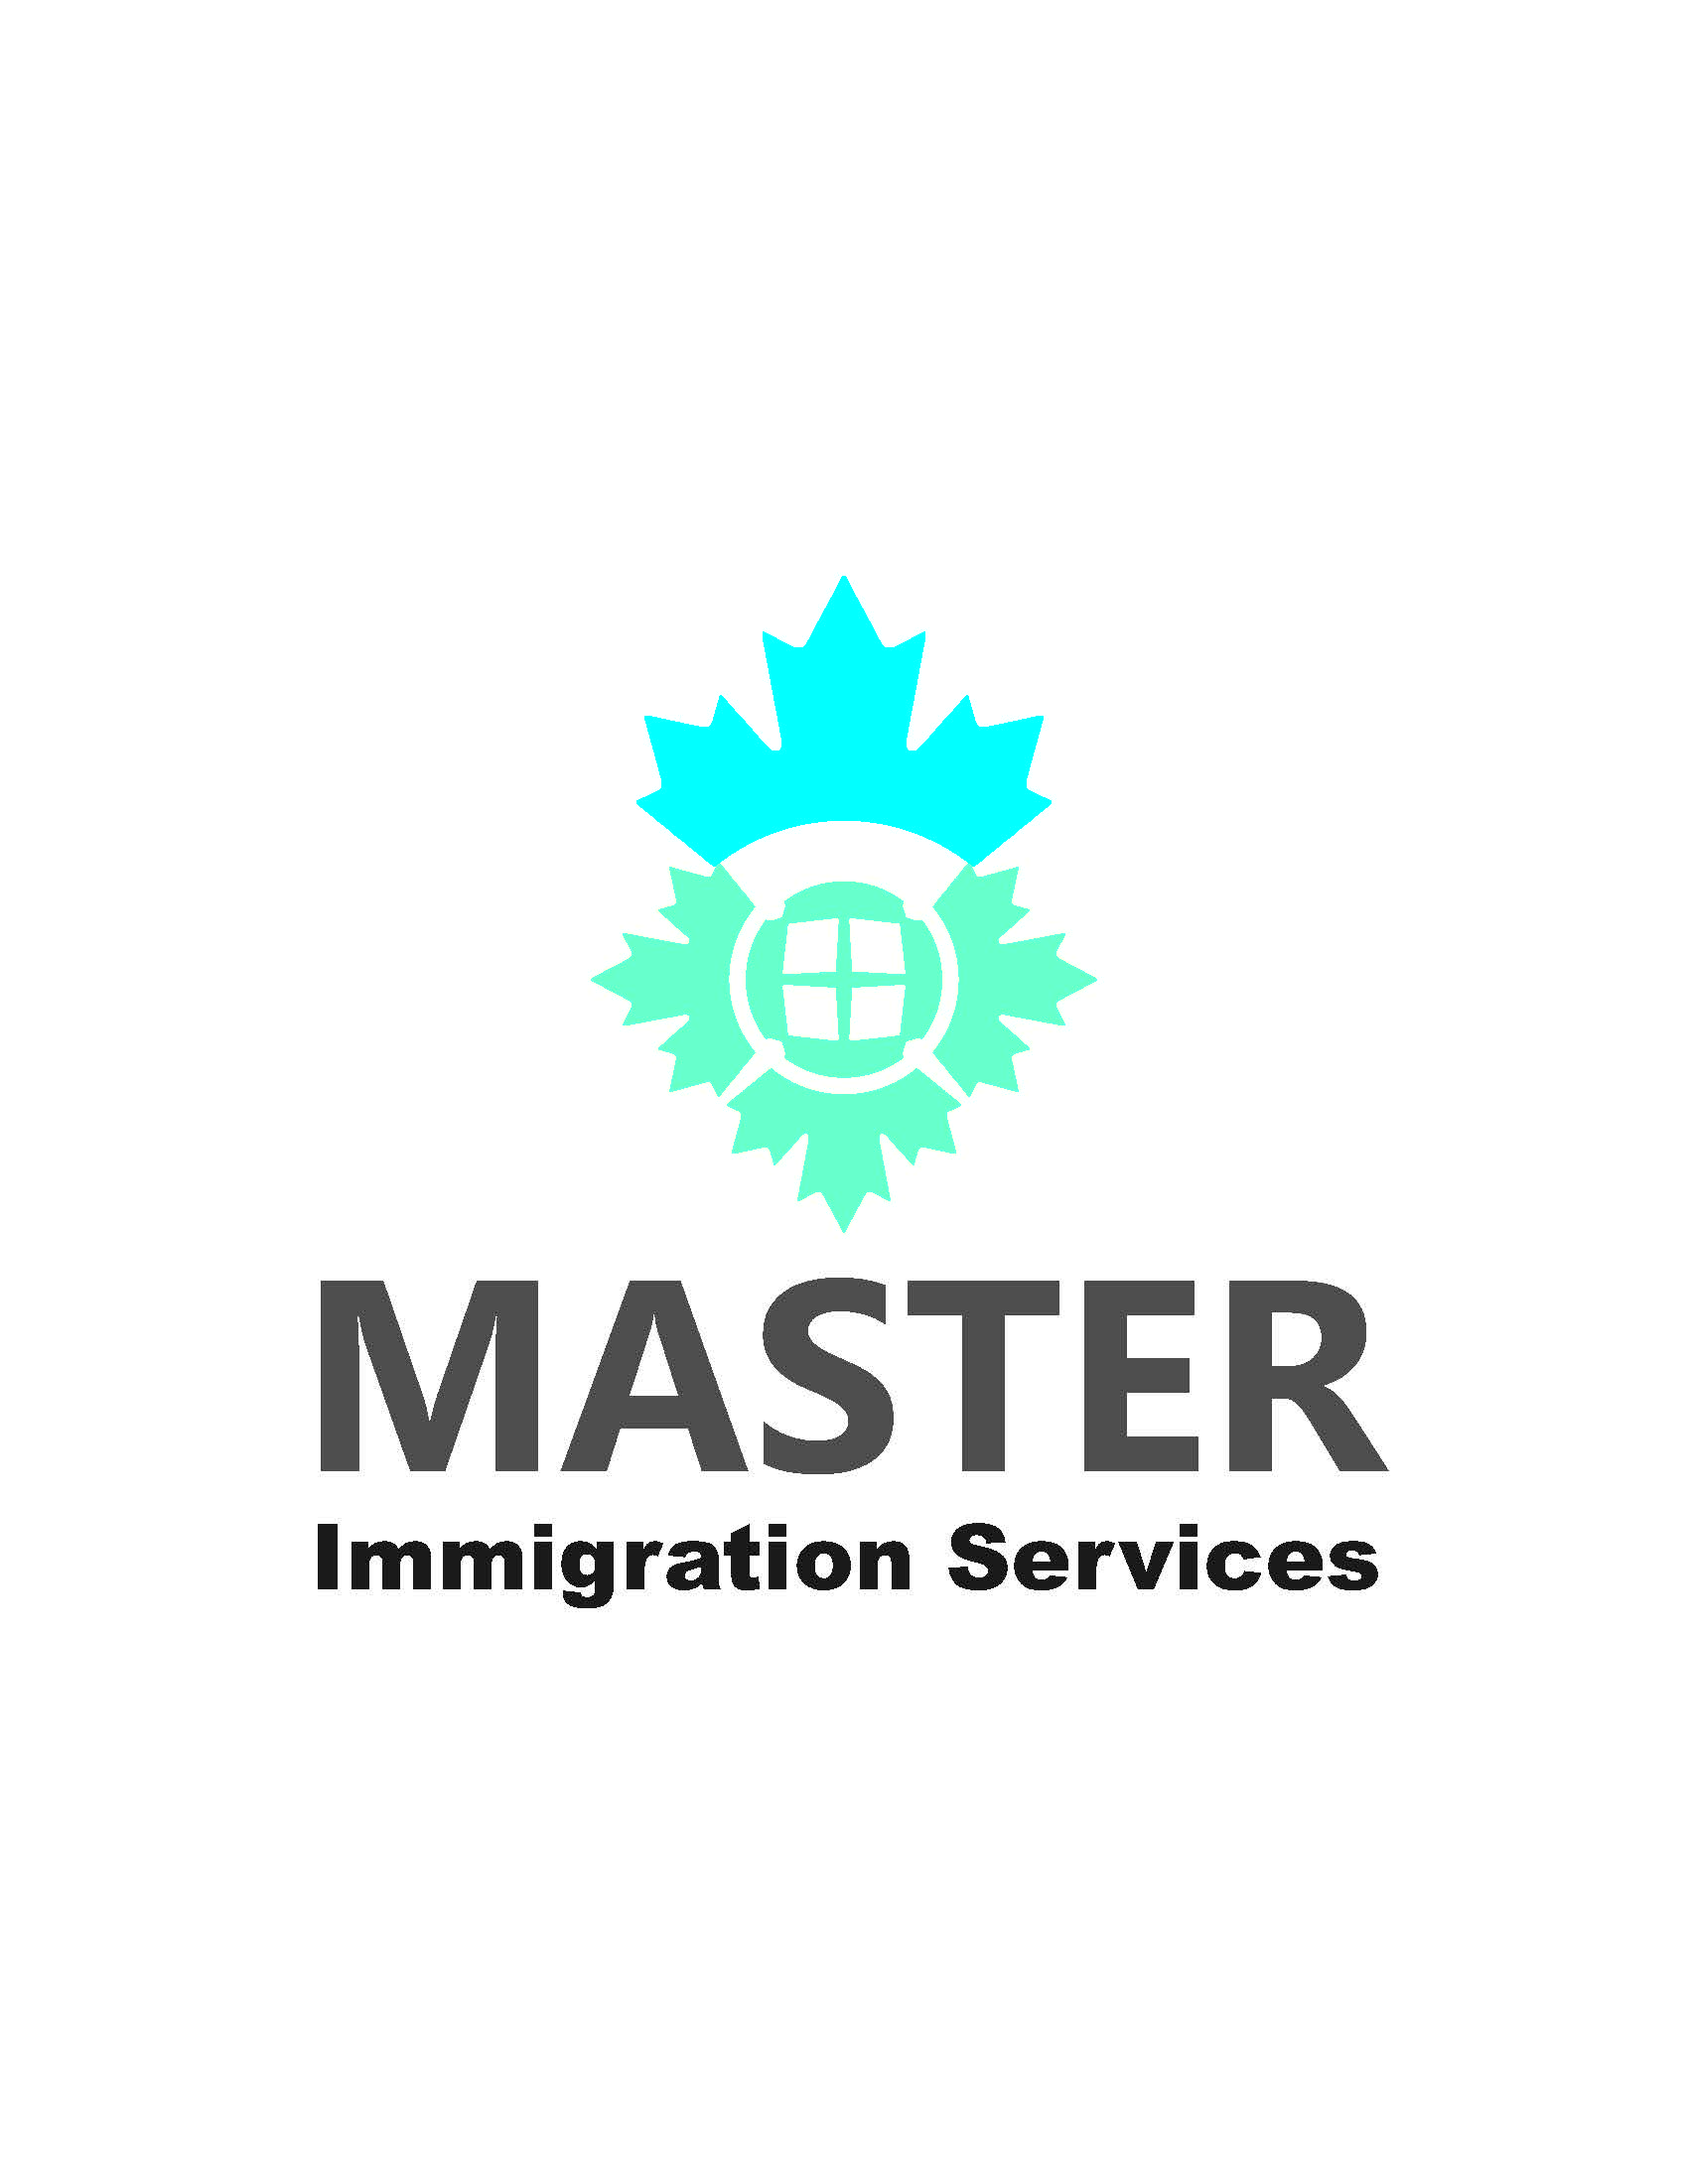 Master Immigration Services Granville Island Vancouver, BC